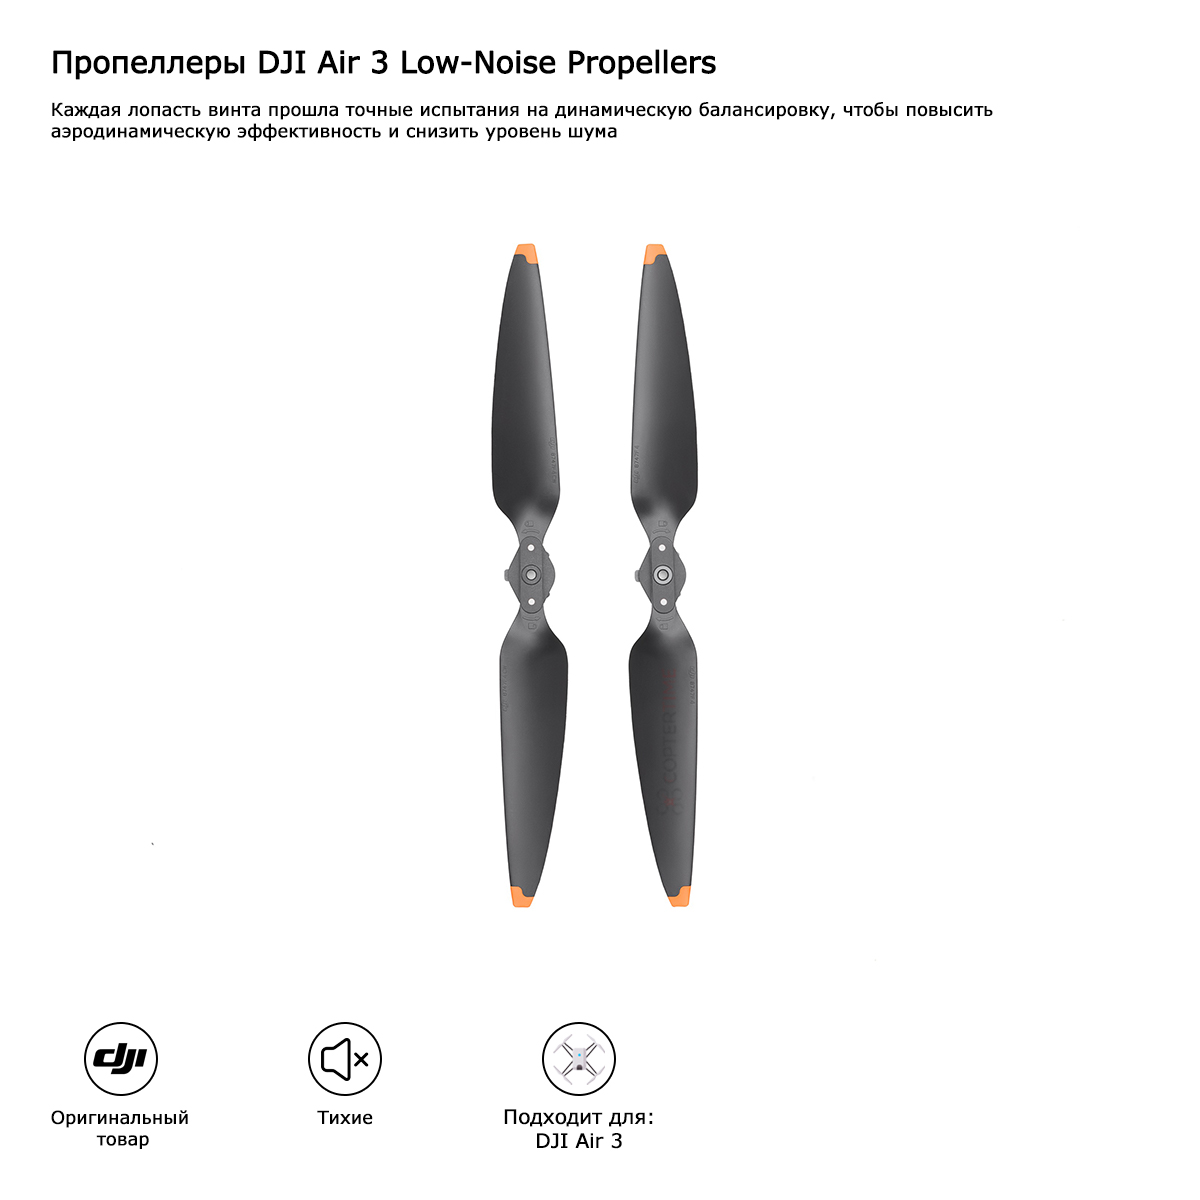 Пропеллеры DJI Air 3 Low-Noise Propellers